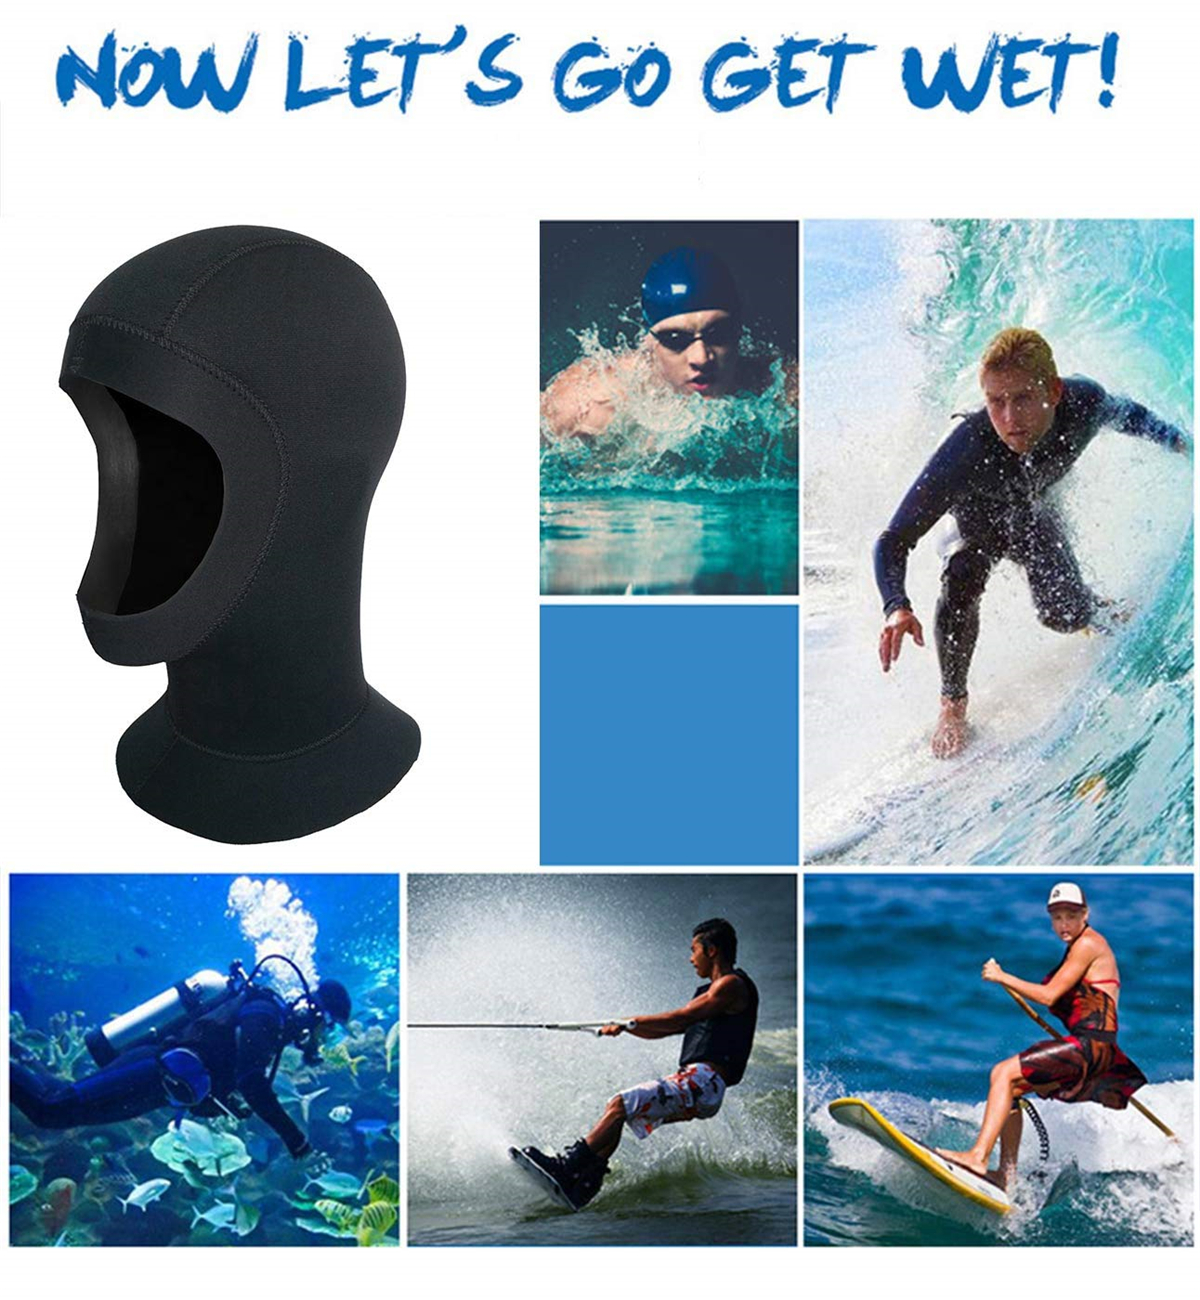 5mm-Neoprene-Scuba-Diving-Hood-Mask-Warm-Water-Sports-Swimming-Hat-Wetsuit-Cap-Head-Cover-1469143